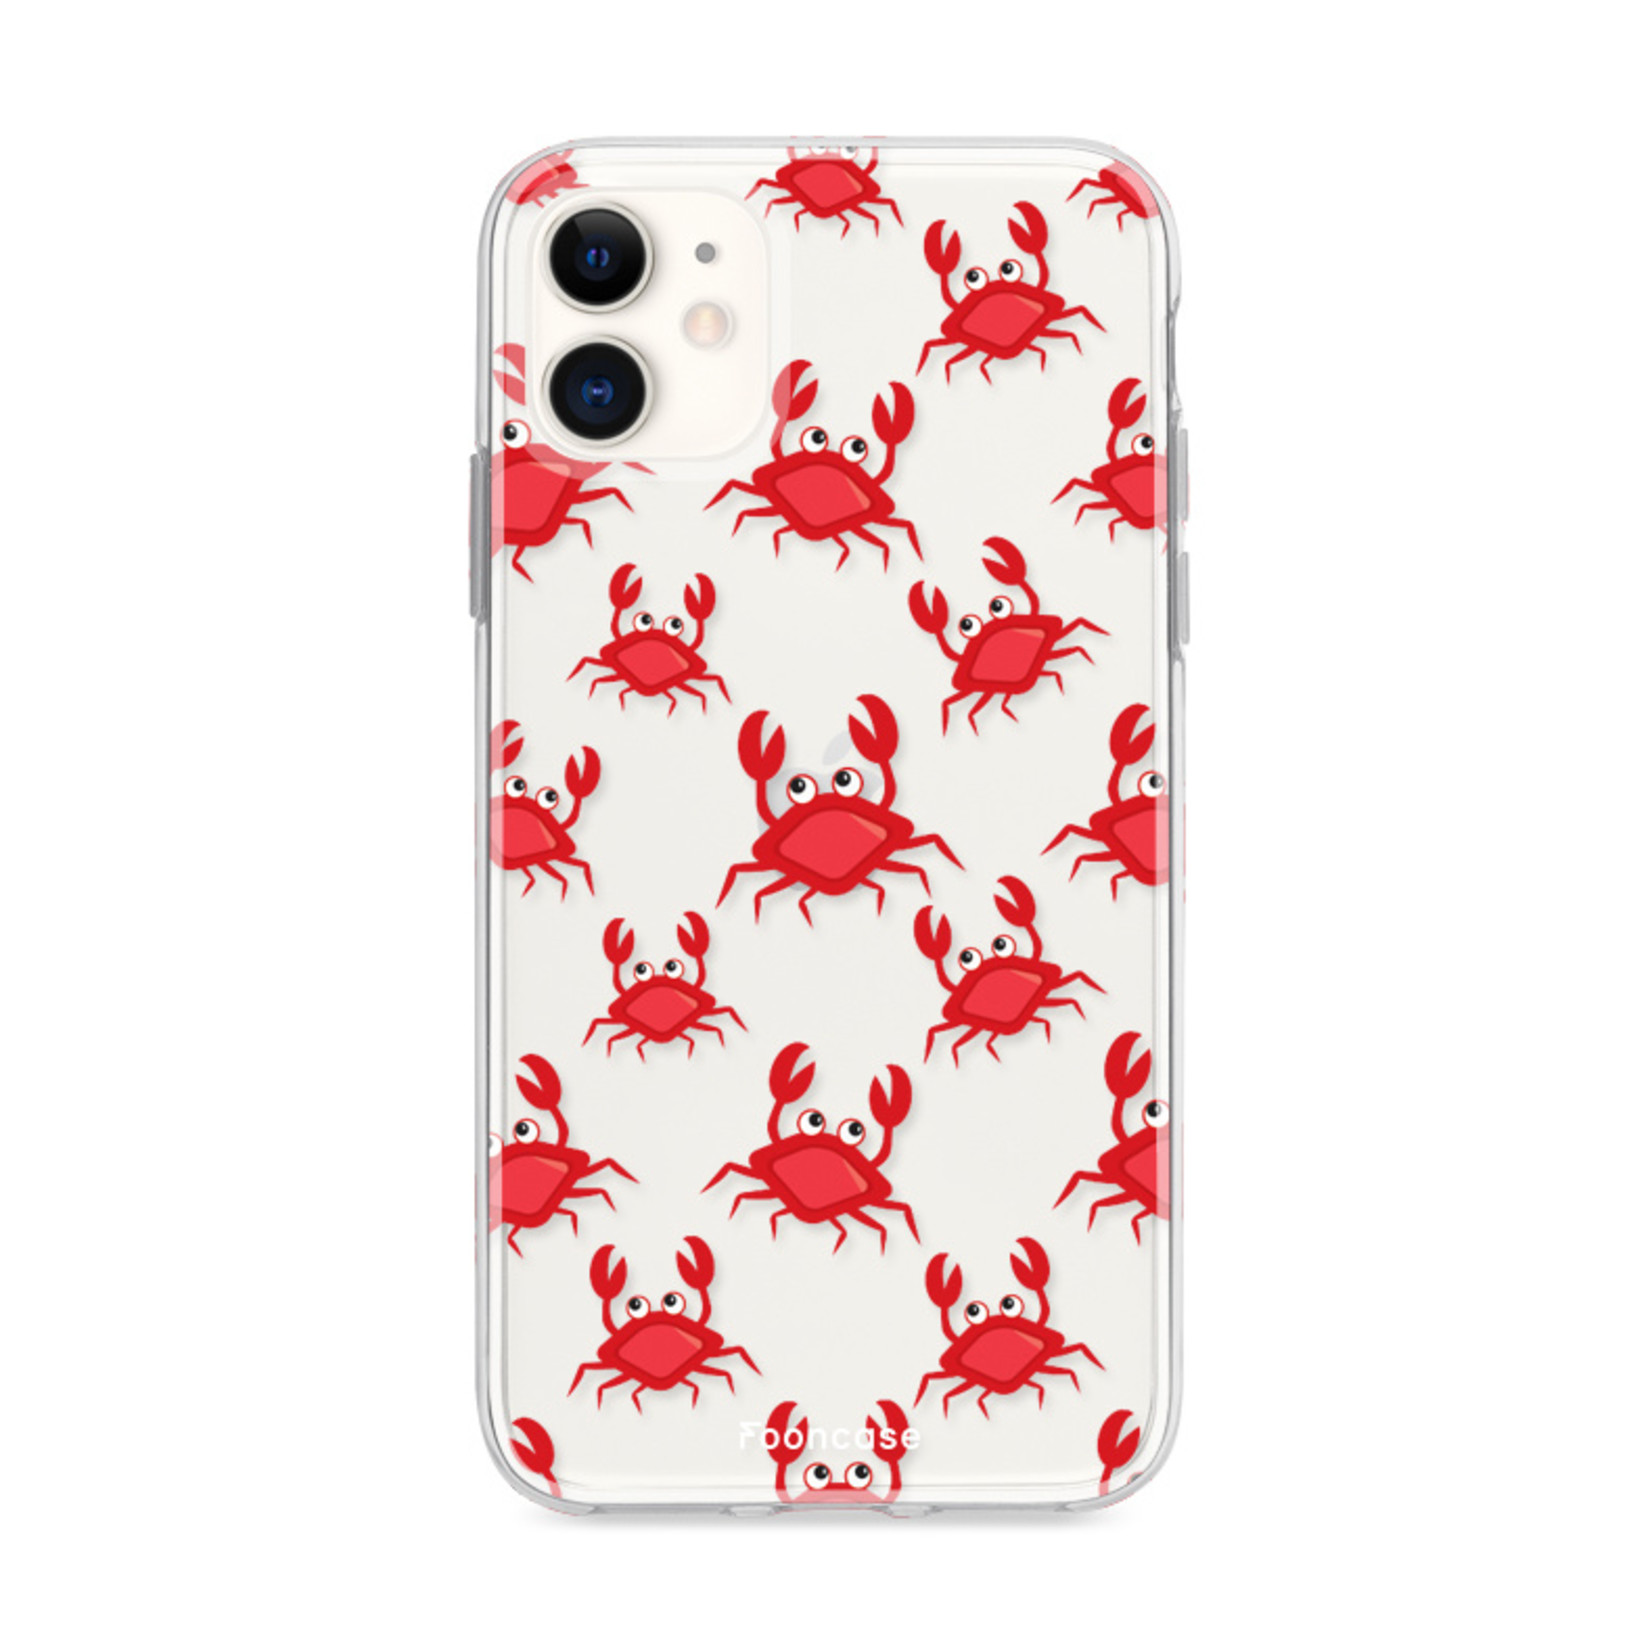 FOONCASE iPhone 12 Mini hoesje TPU Soft Case - Back Cover - Crabs / Krabbetjes / Krabben